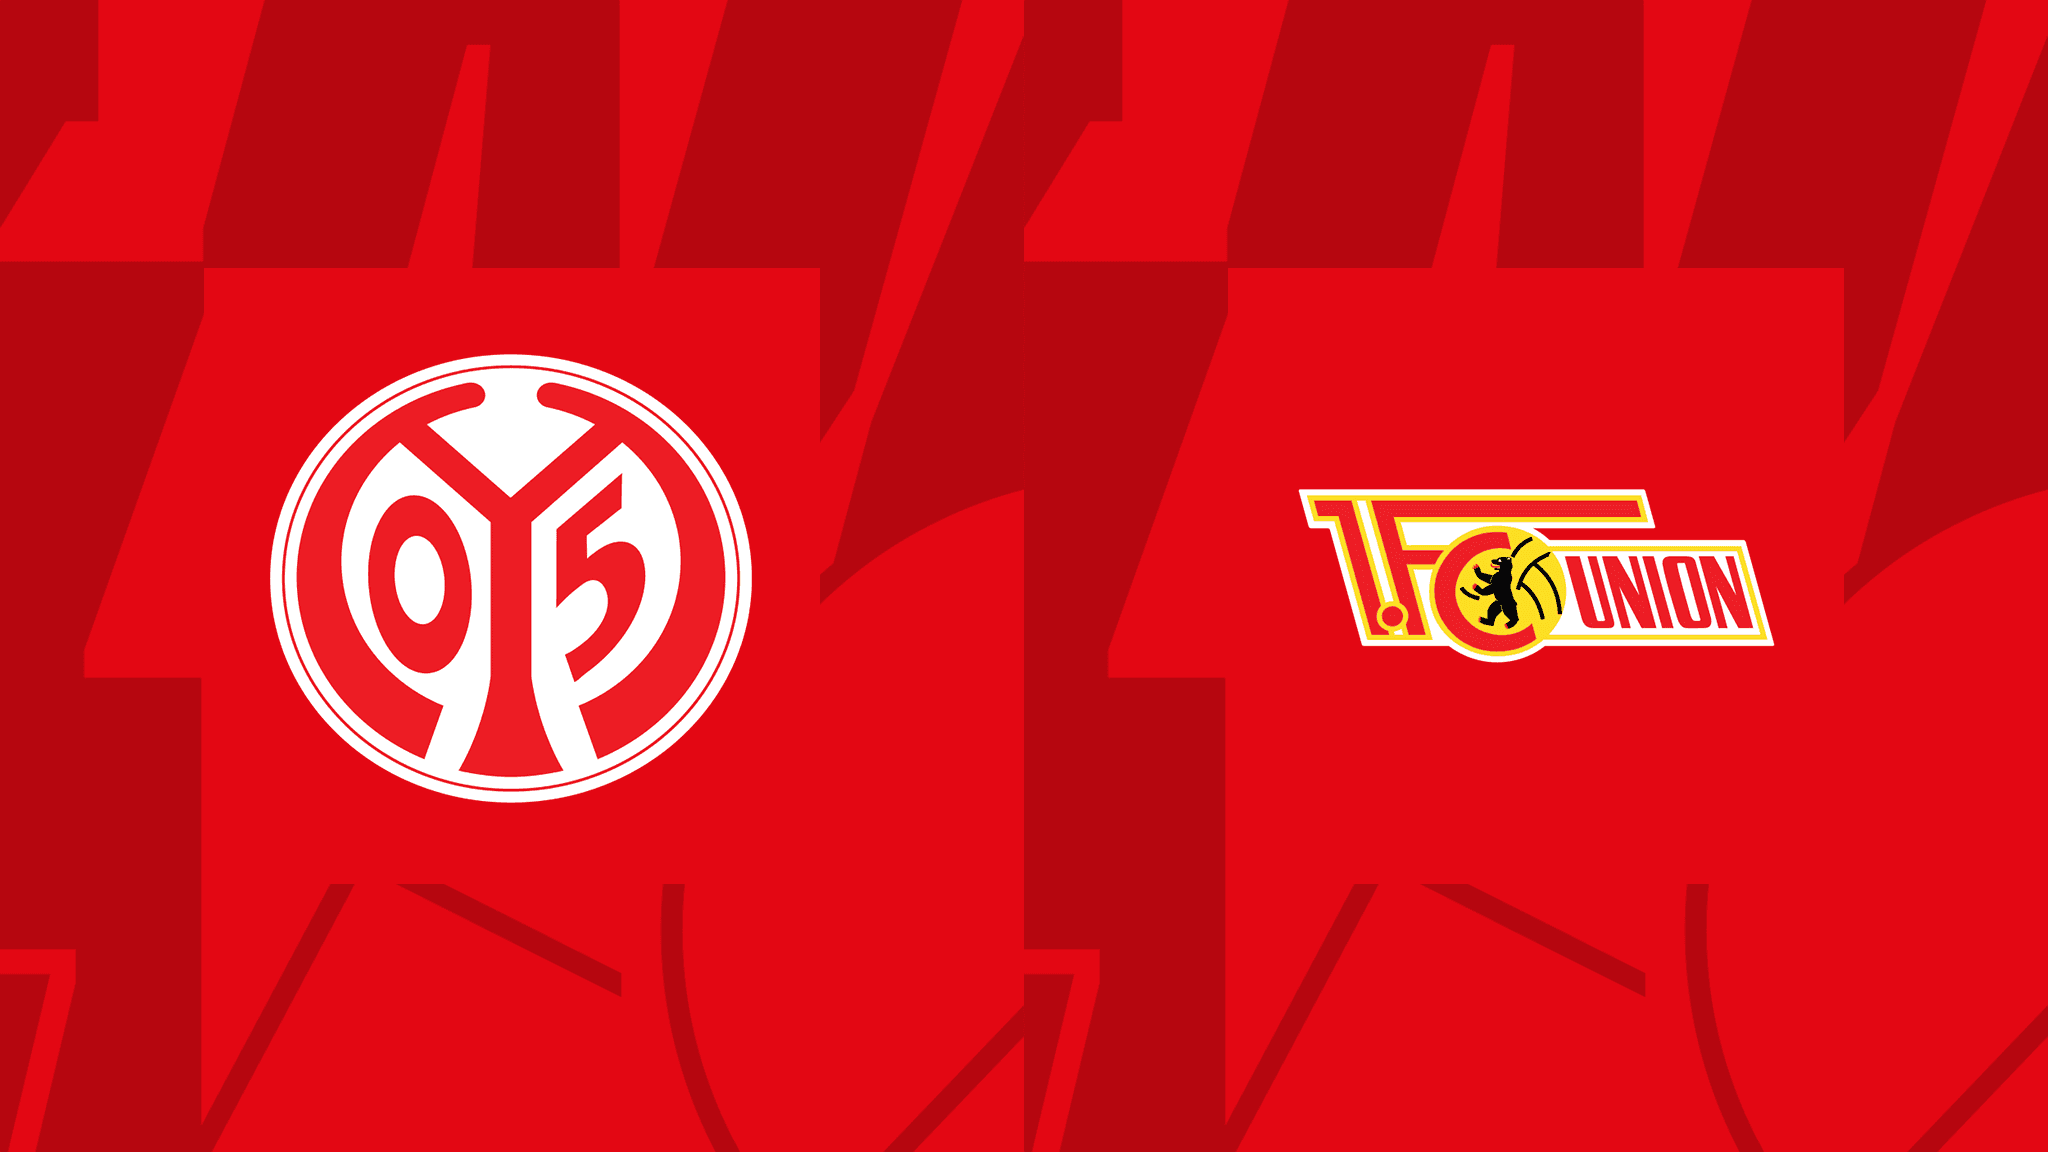 Mainz vs Union Berlin